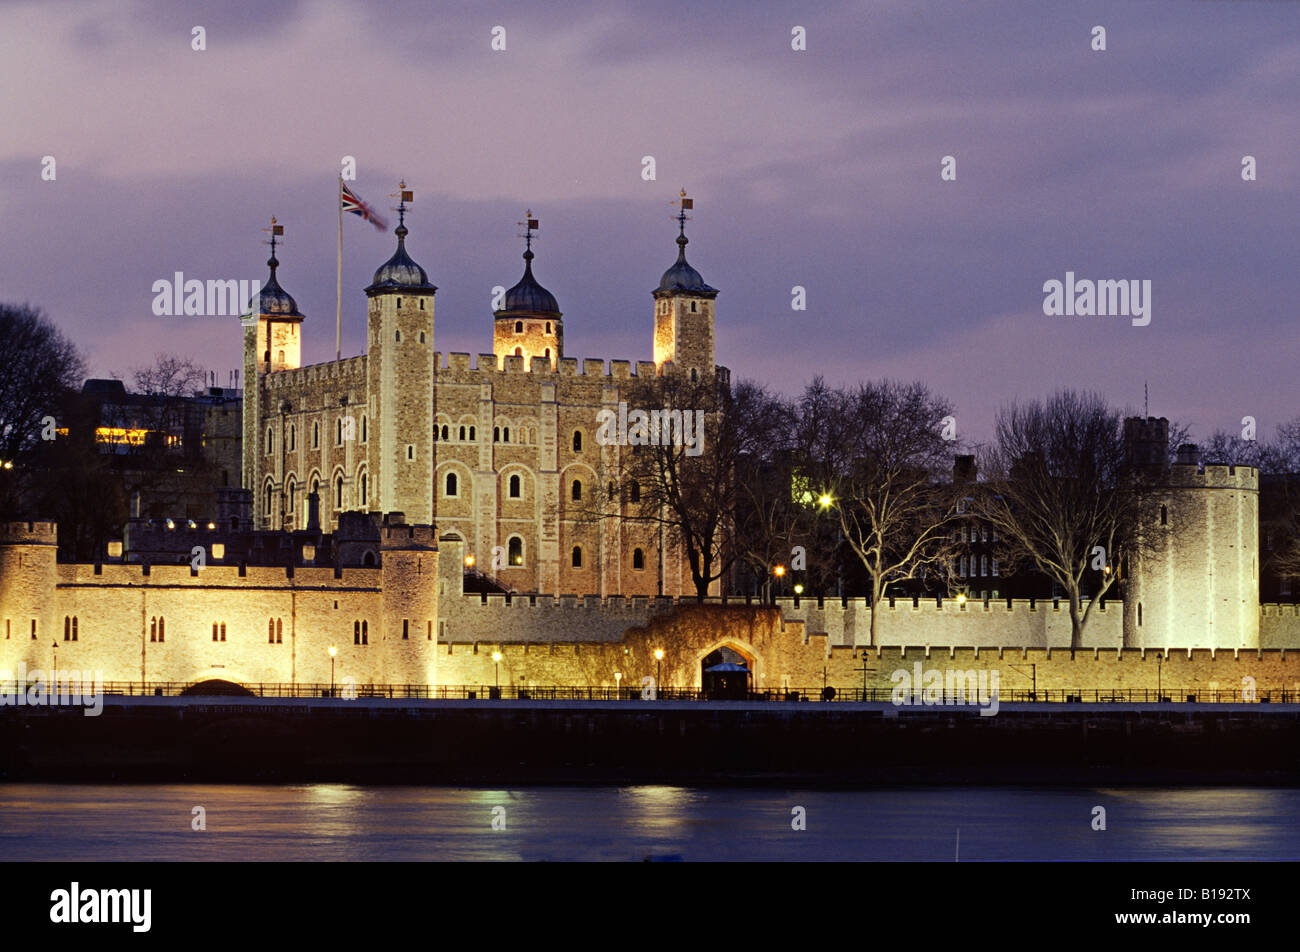 Großbritannien London Tower of London Nacht River Thames Built 1077 97 White Tower Stockfoto